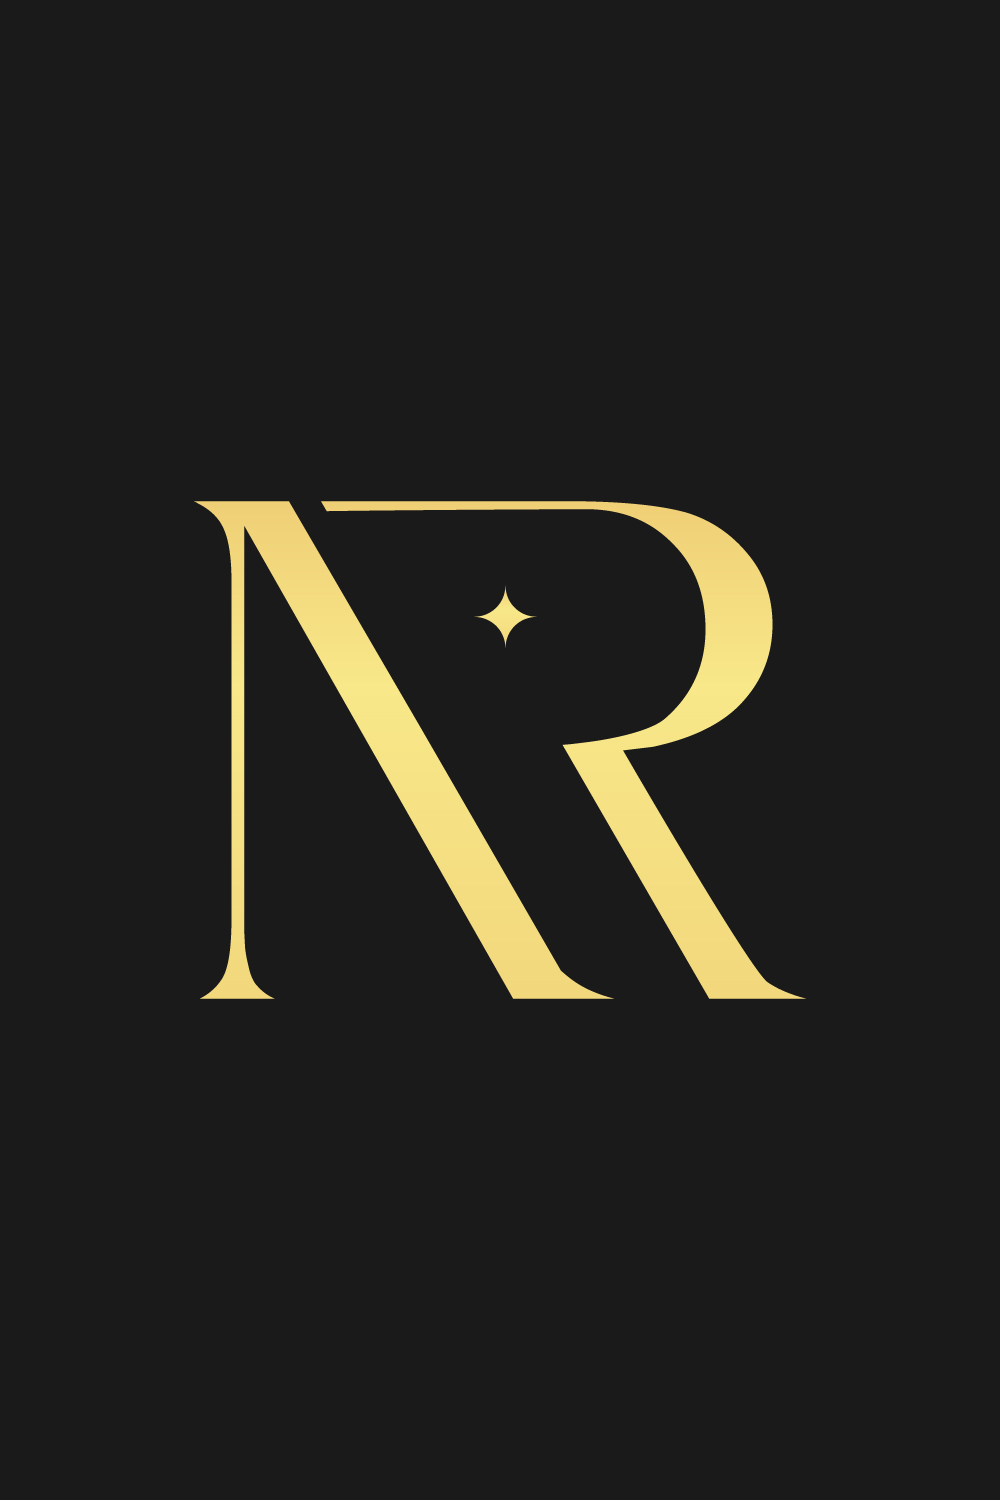 Luxury Letter NR logo design for your brand pinterest preview image.